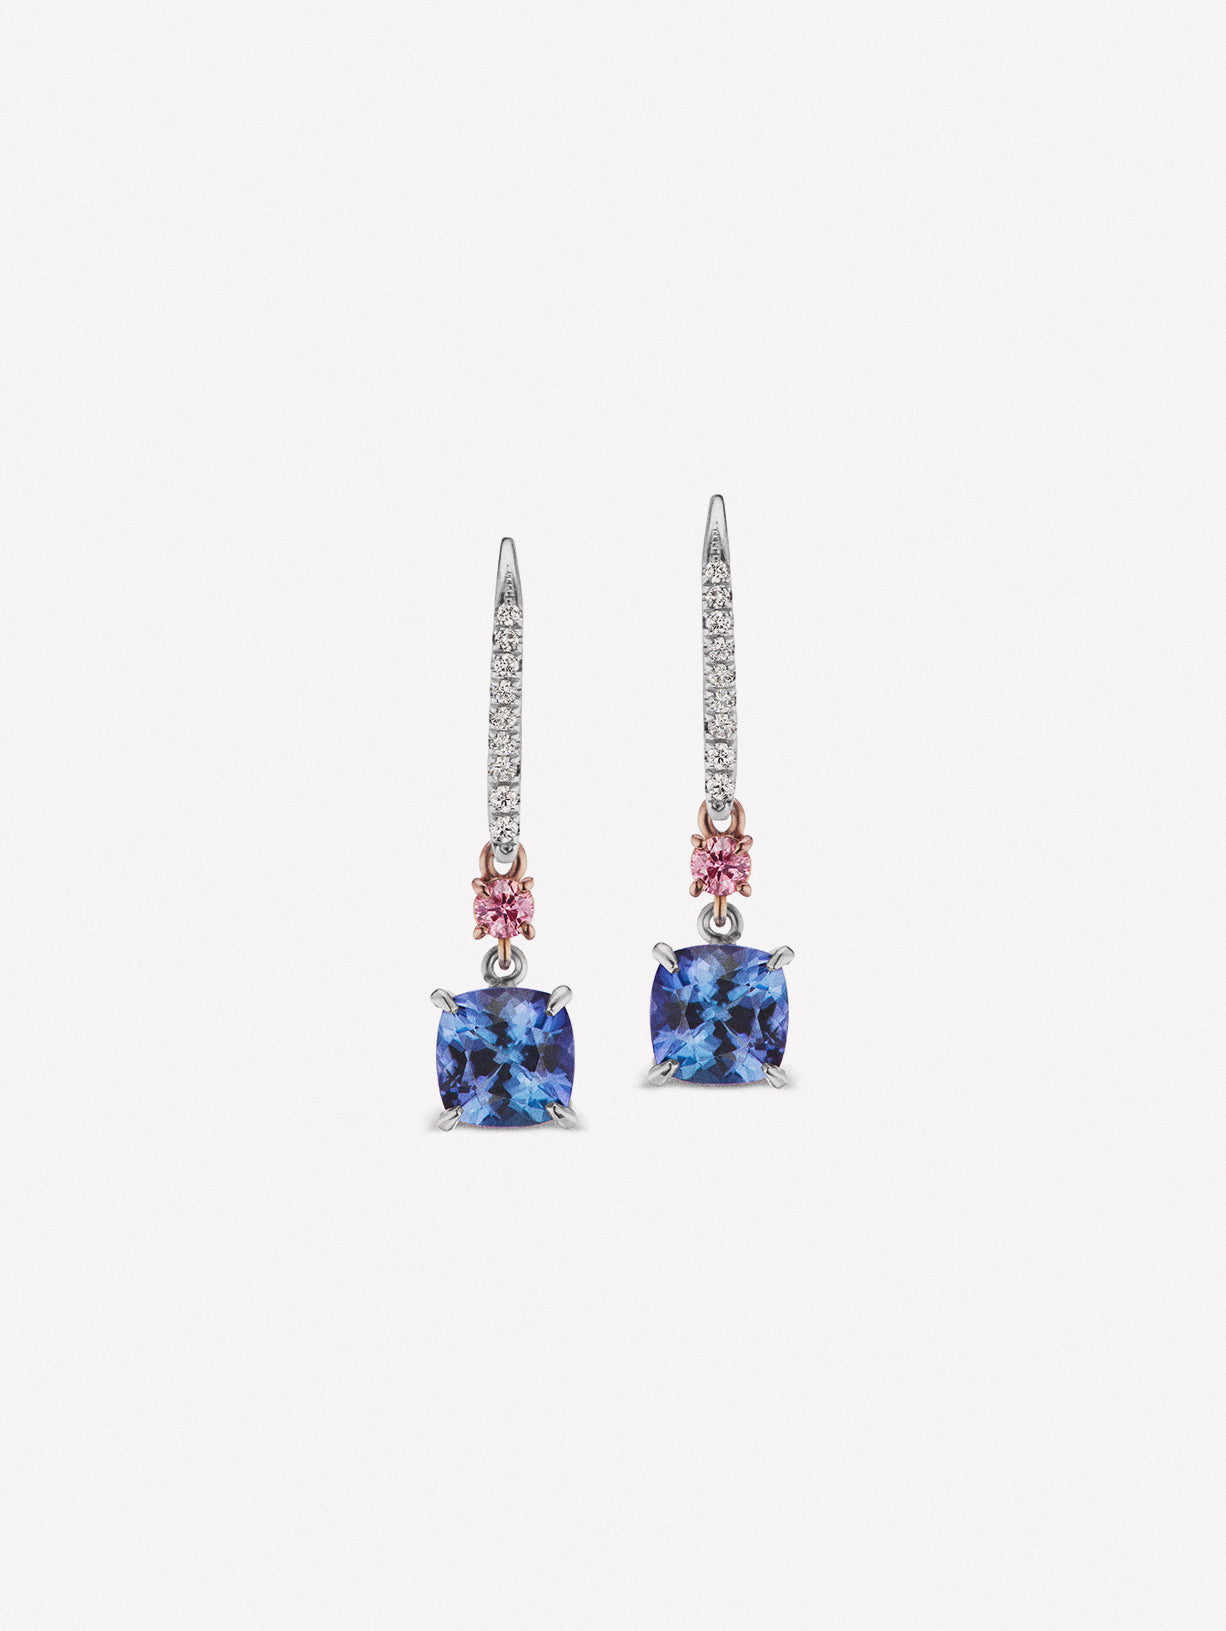 Argyle Pink™ Diamonds and Tanzanite Earrings intense purplish pink diamonds